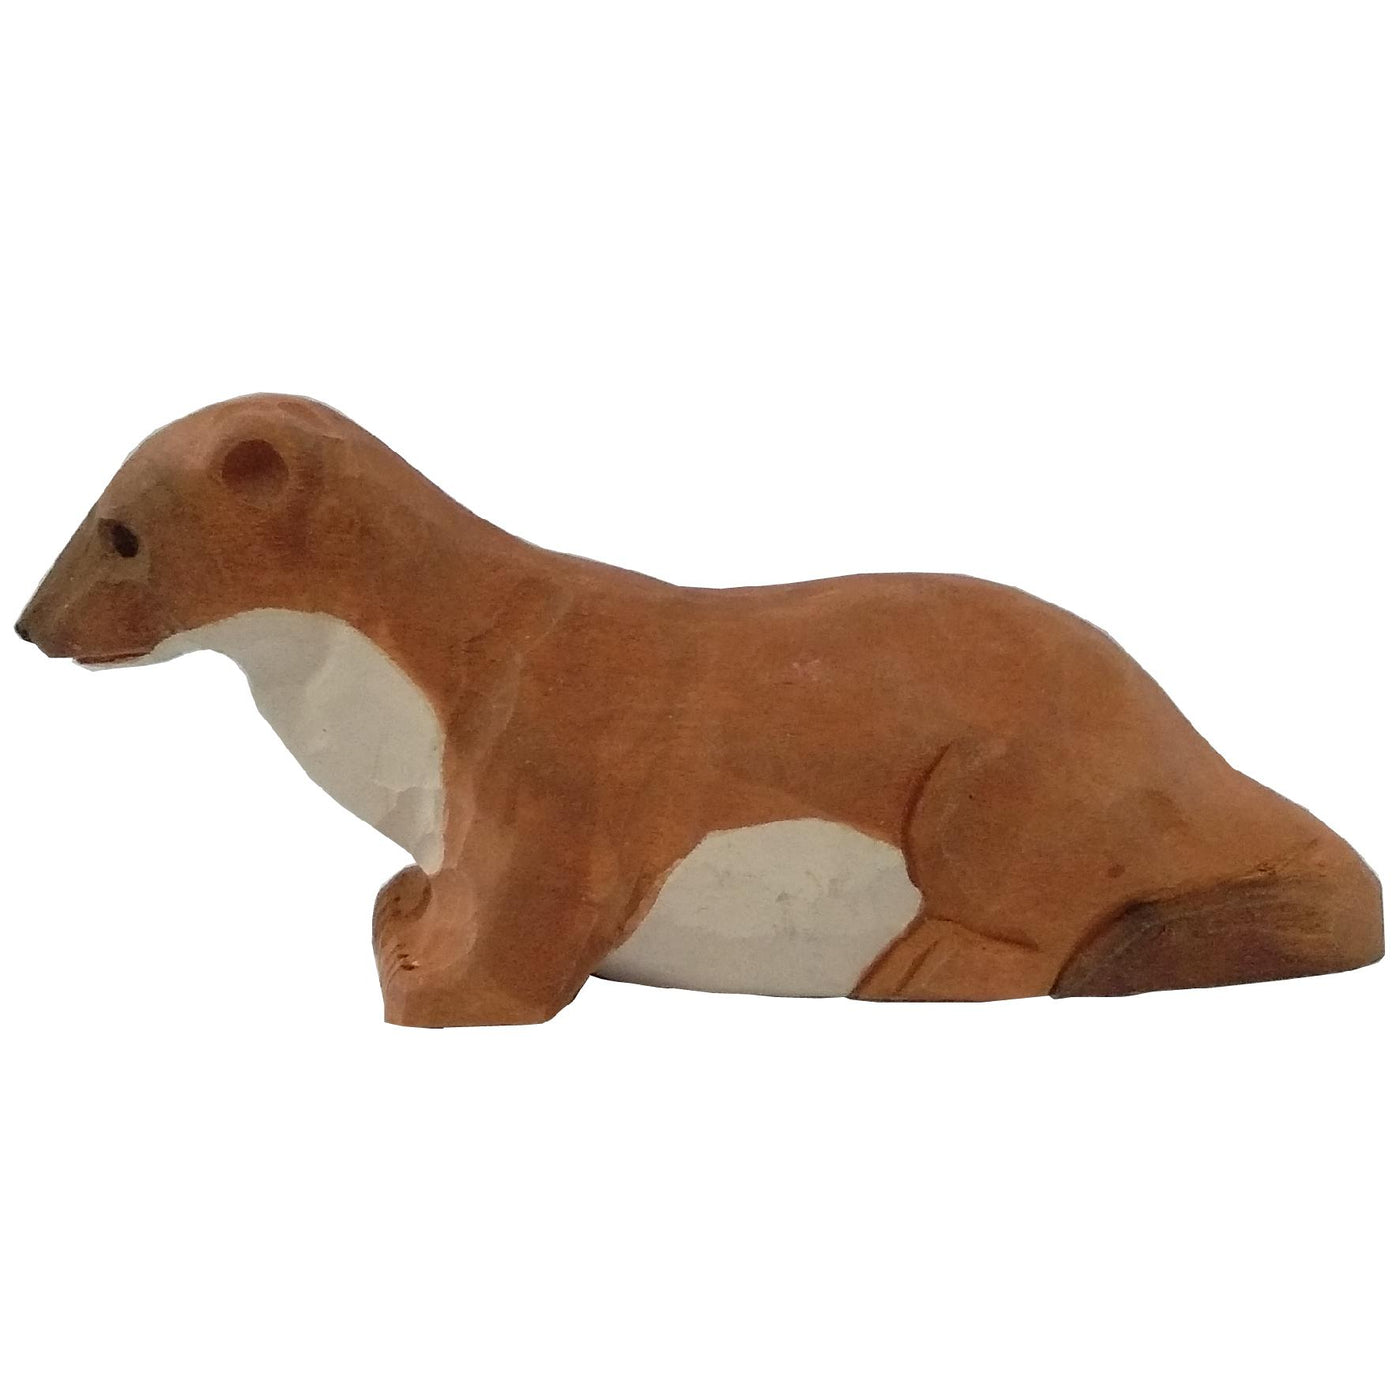 Wudimals® Wooden Stoat Animal Toy